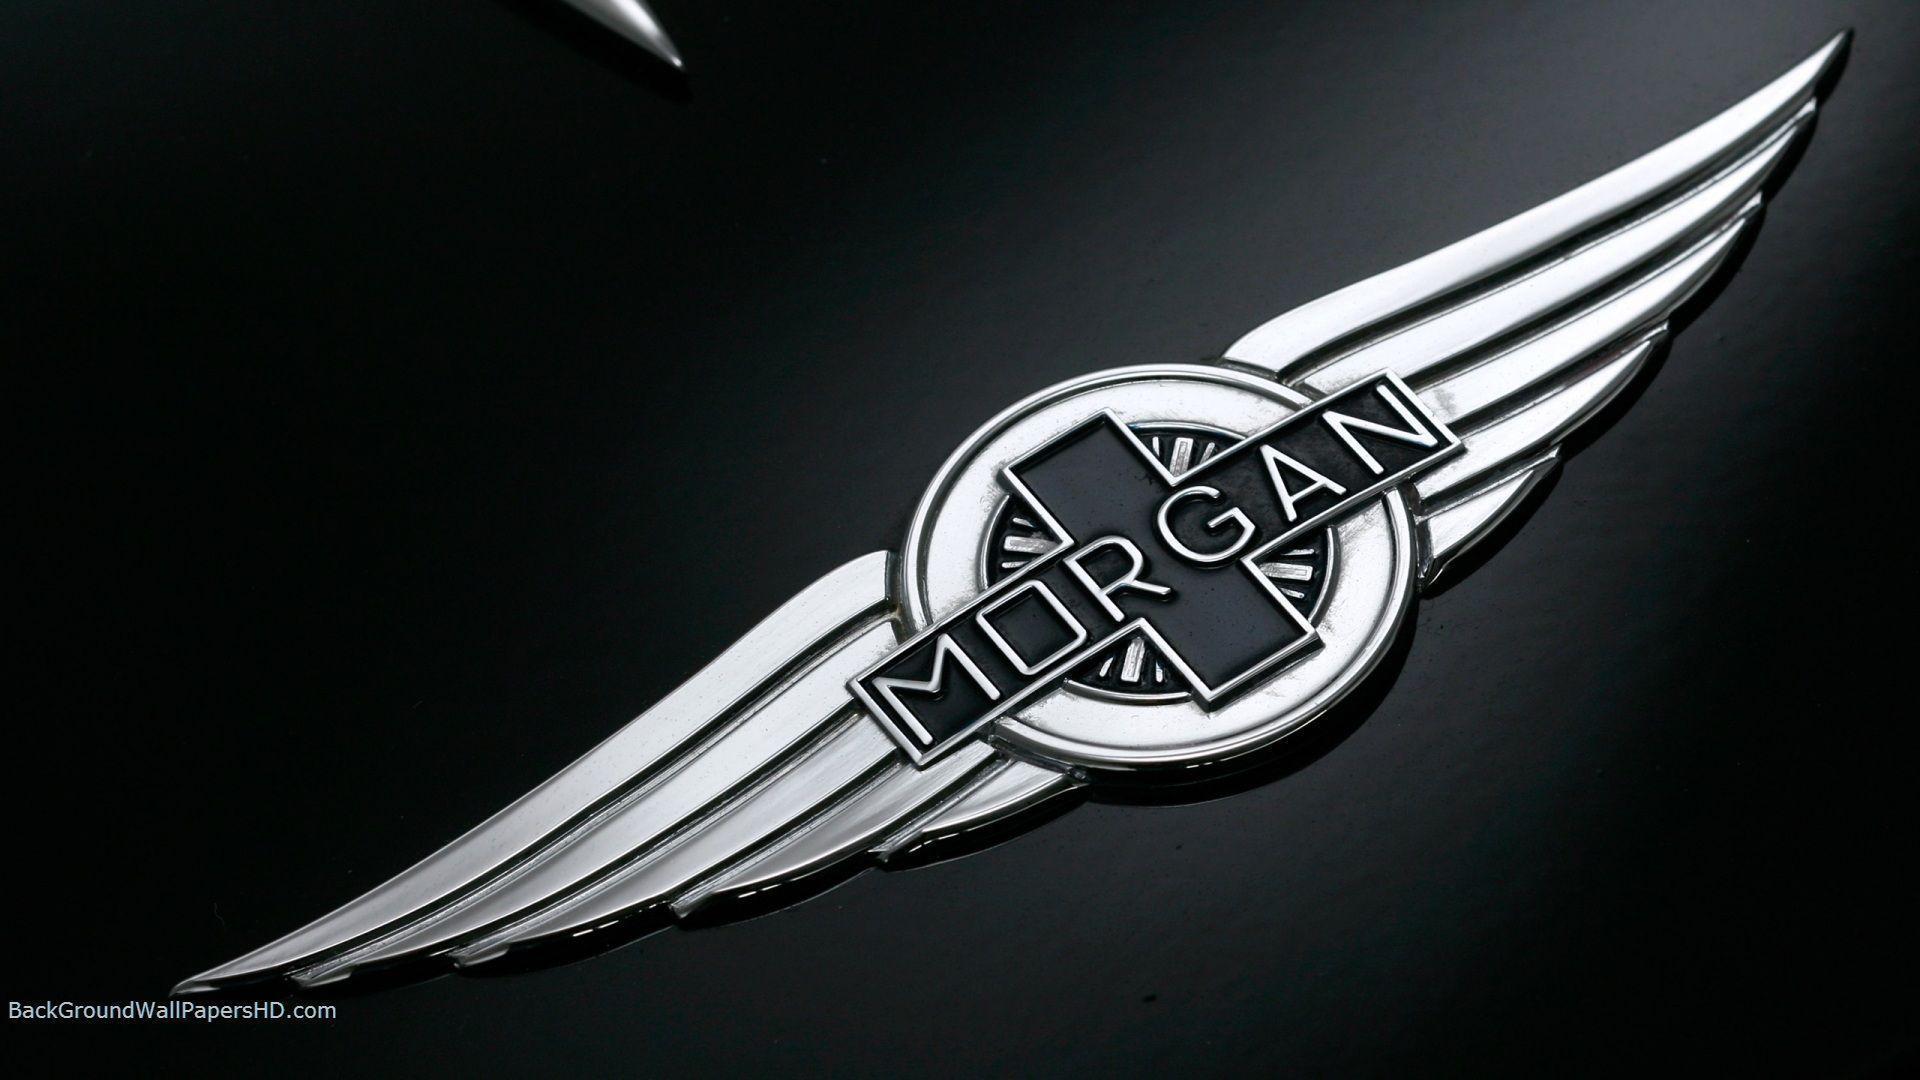 Morgan Car Logo Wallpaper 1080p. Stuff to Buy. Logos